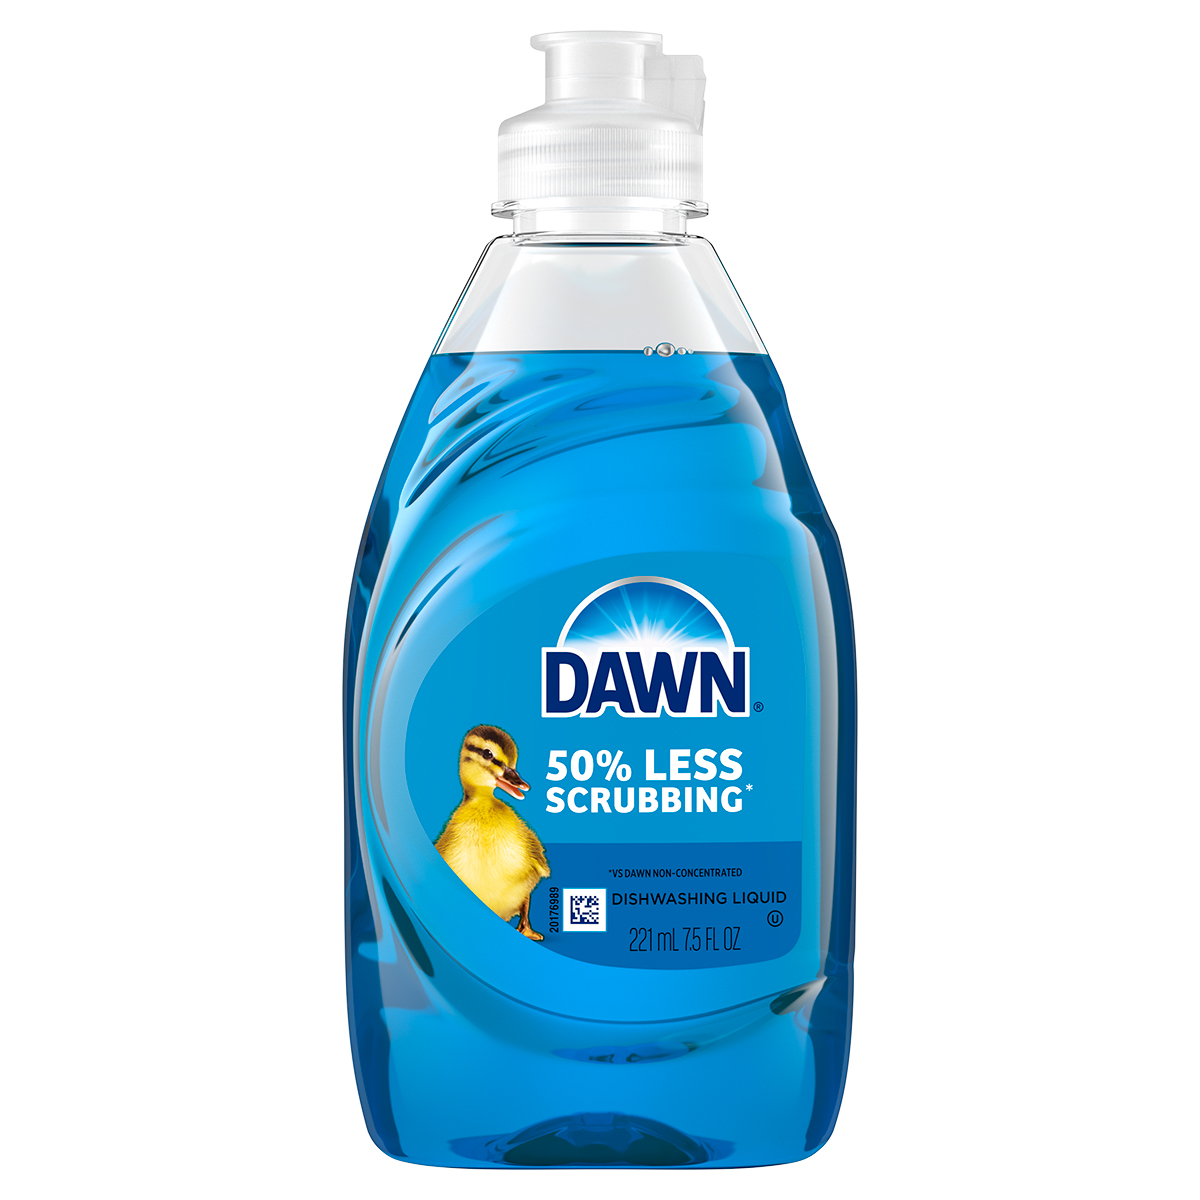 Dawn Original Dishwashing Liquid 7.5 oz